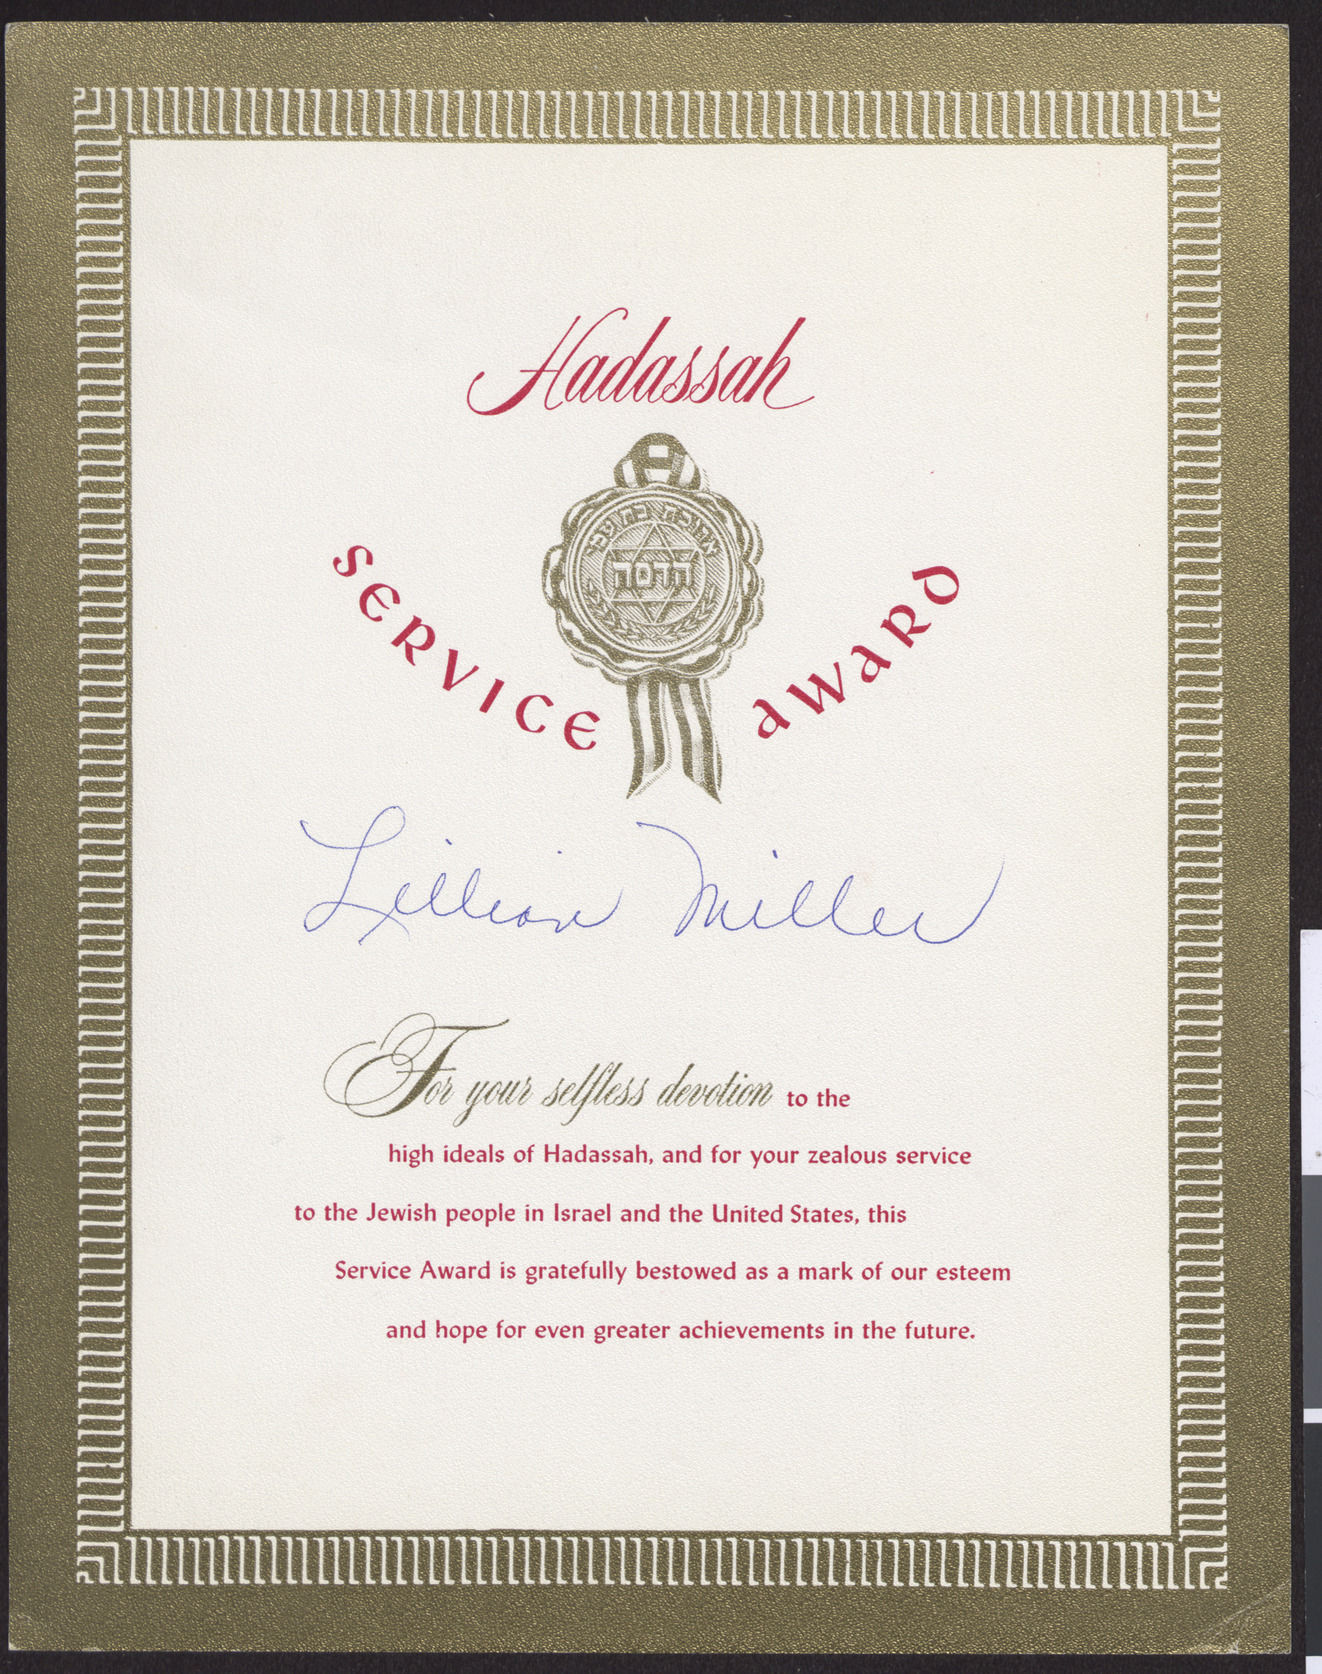 Hadassah Service Award for Lillian Miller, undated